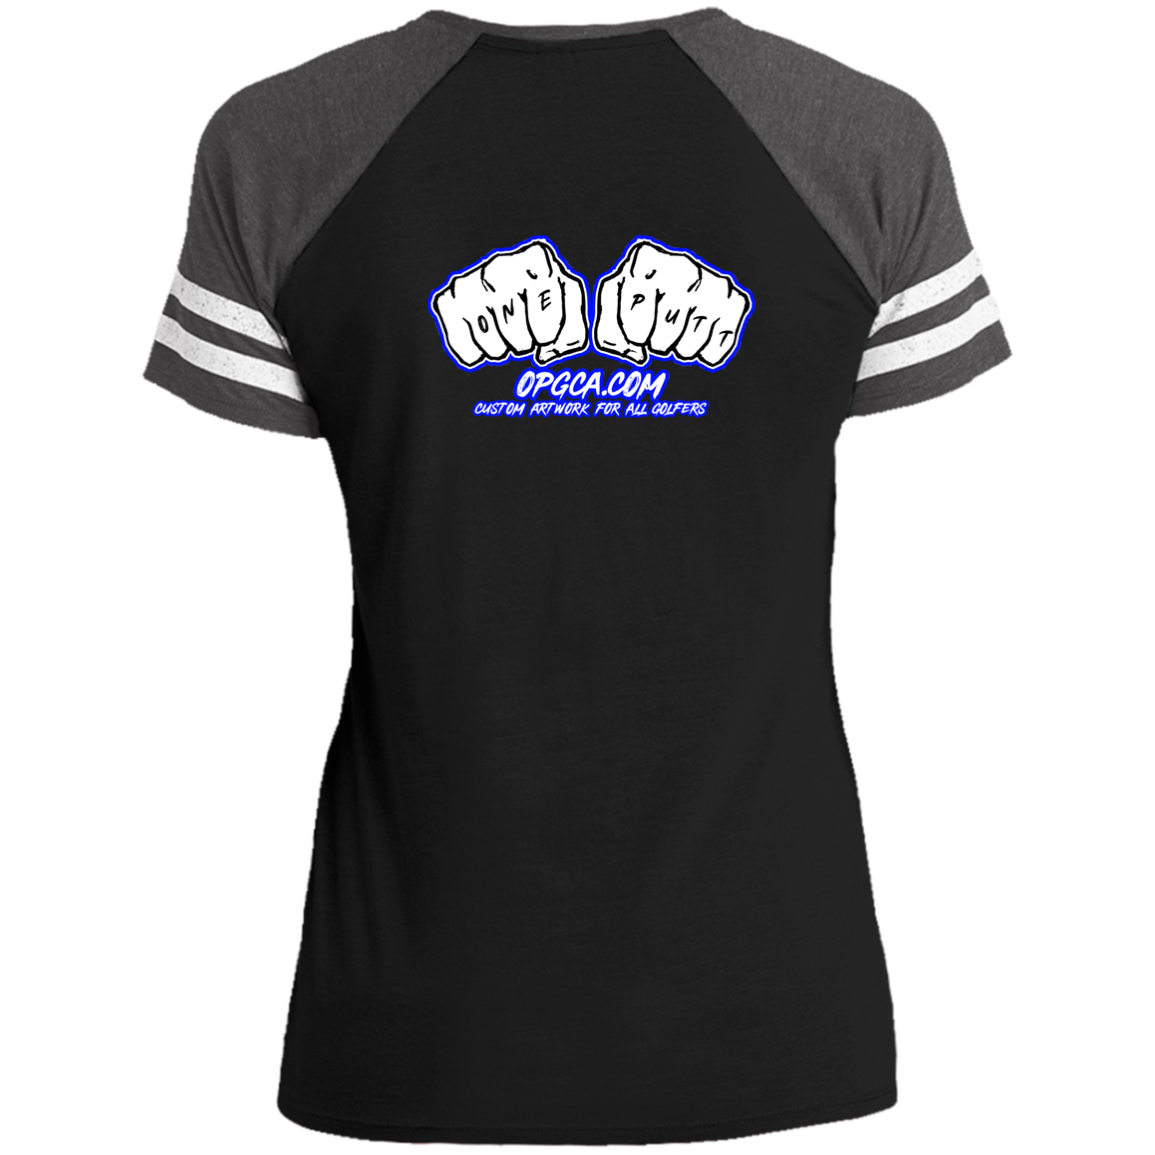 OPG Custom Design #3. Blue Tees Blues Brothers Fan Art. Ladies' Game V-Neck T-Shirt